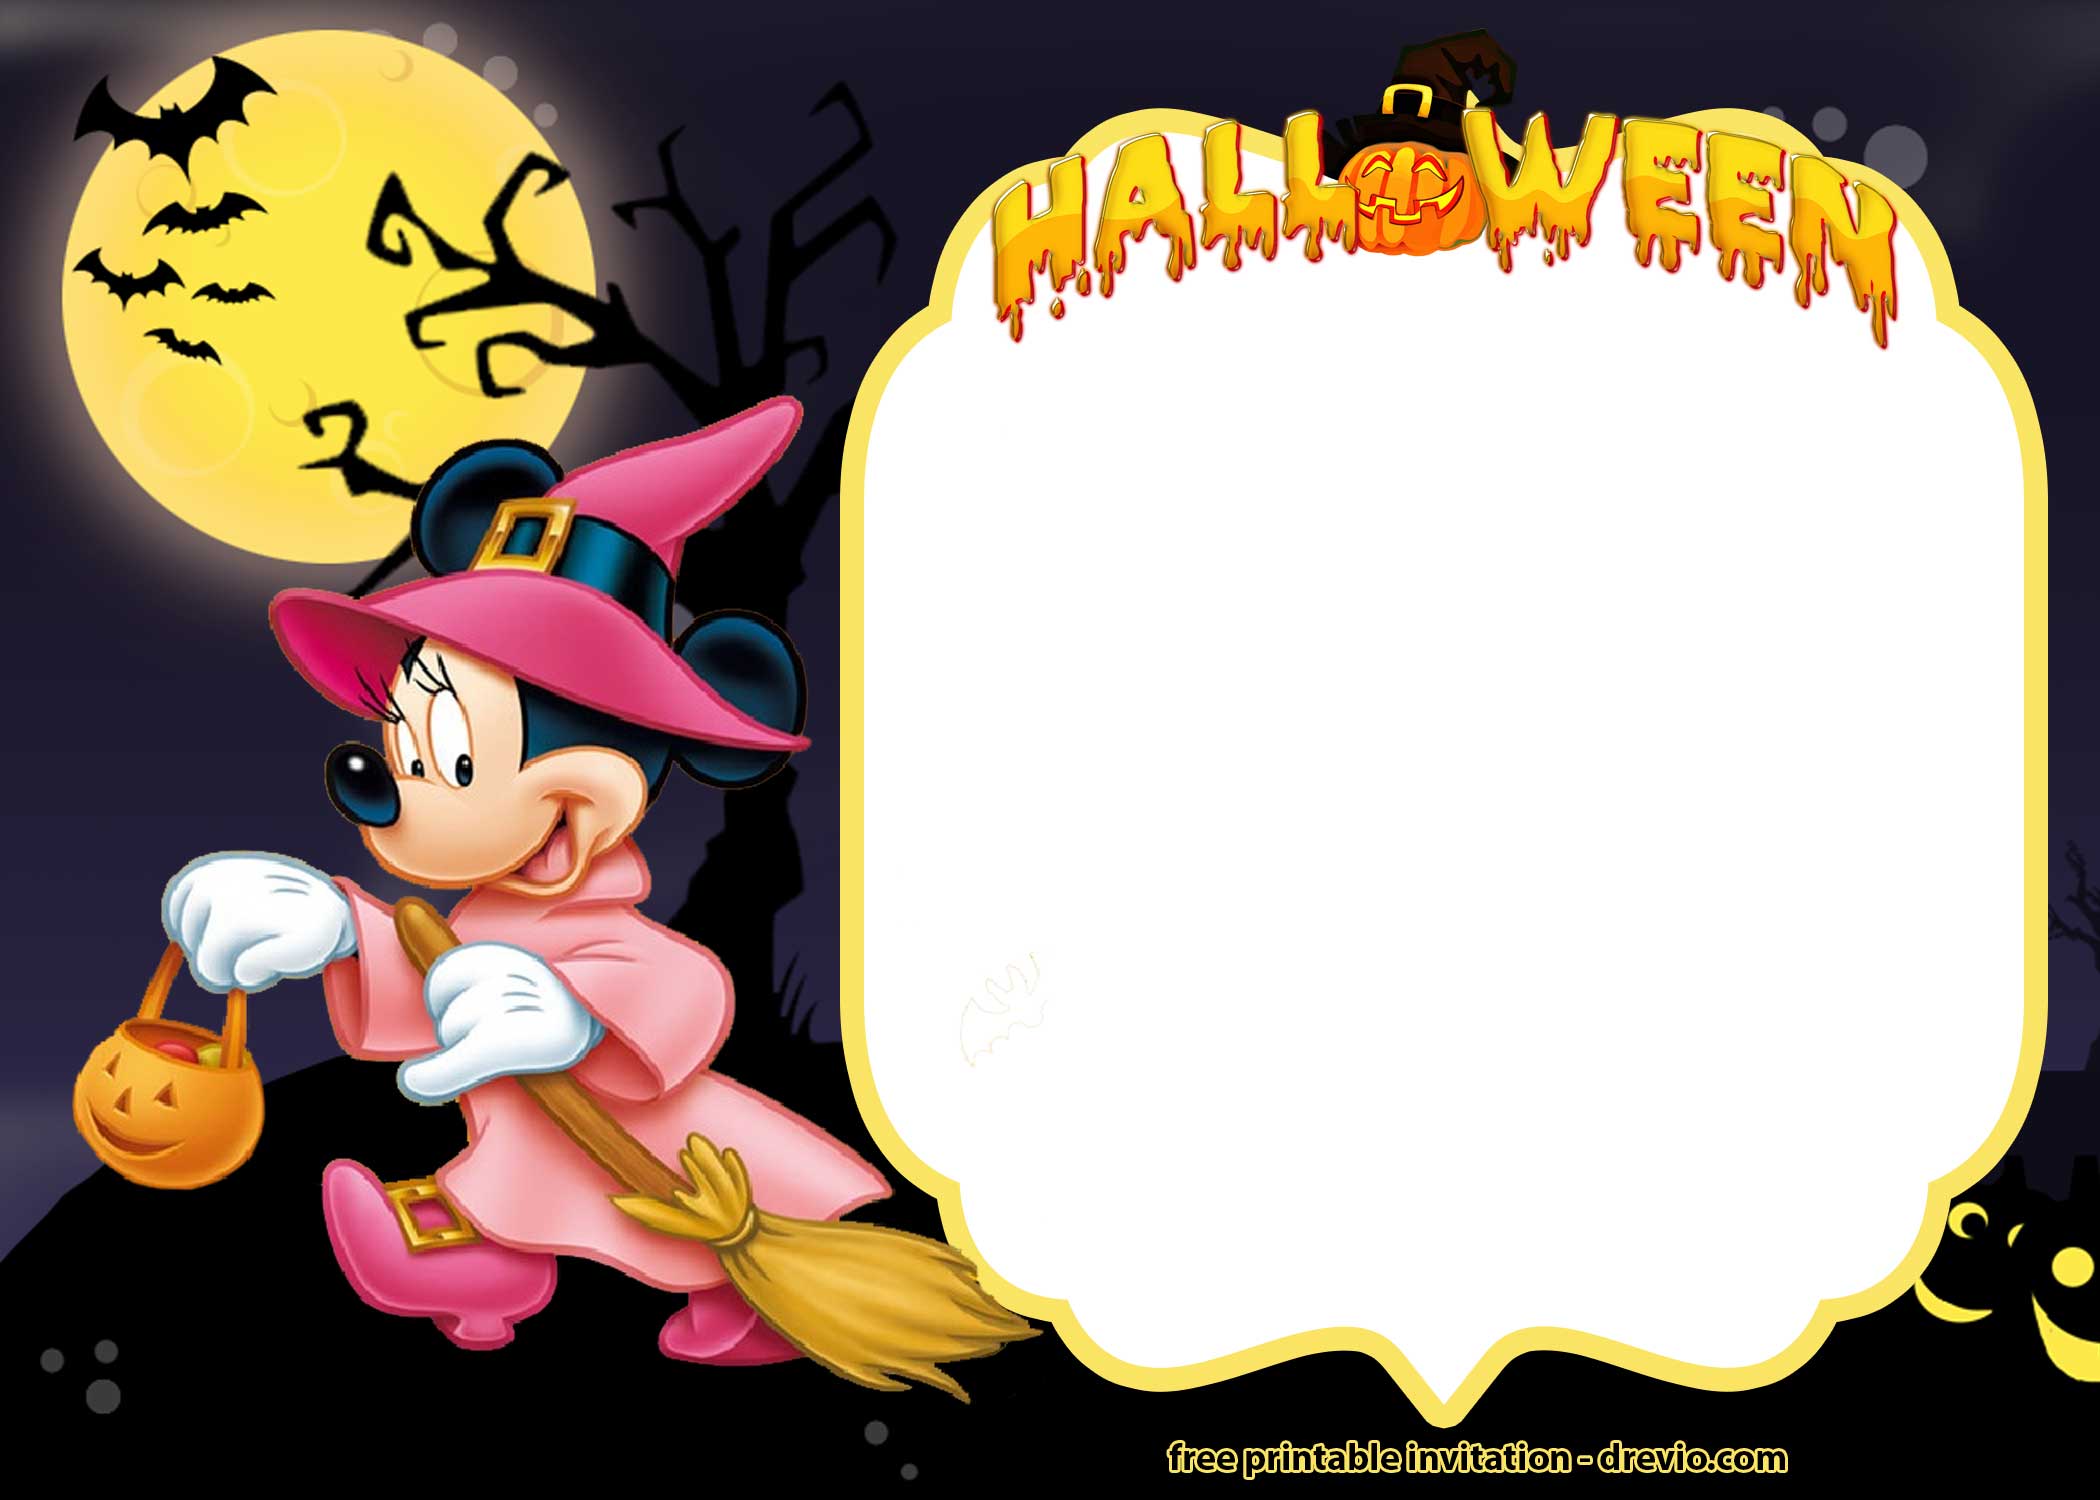 Free Halloween Invitation Template from www.drevio.com